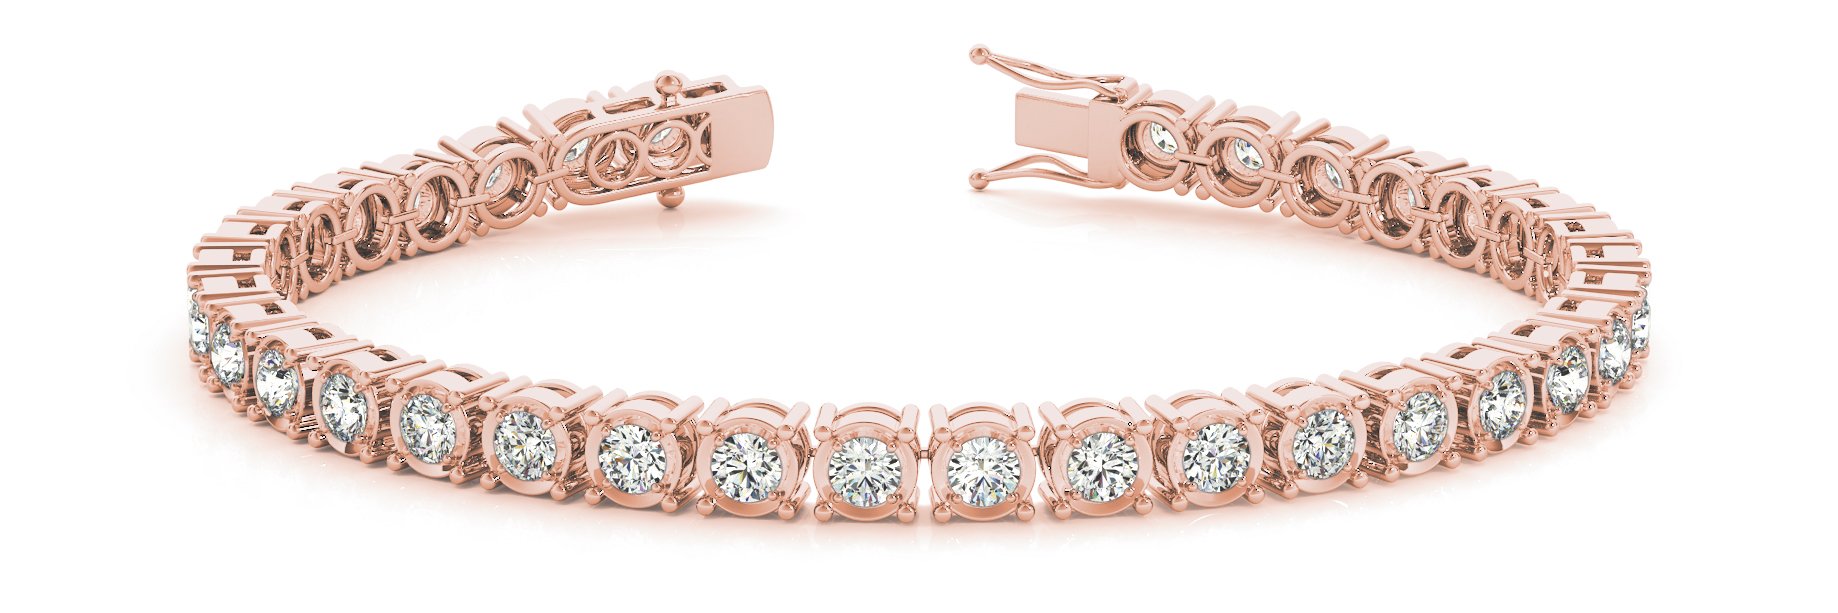 Fancy Diamond Bracelet Ladies 6.79ct tw - 14kt Rose Gold